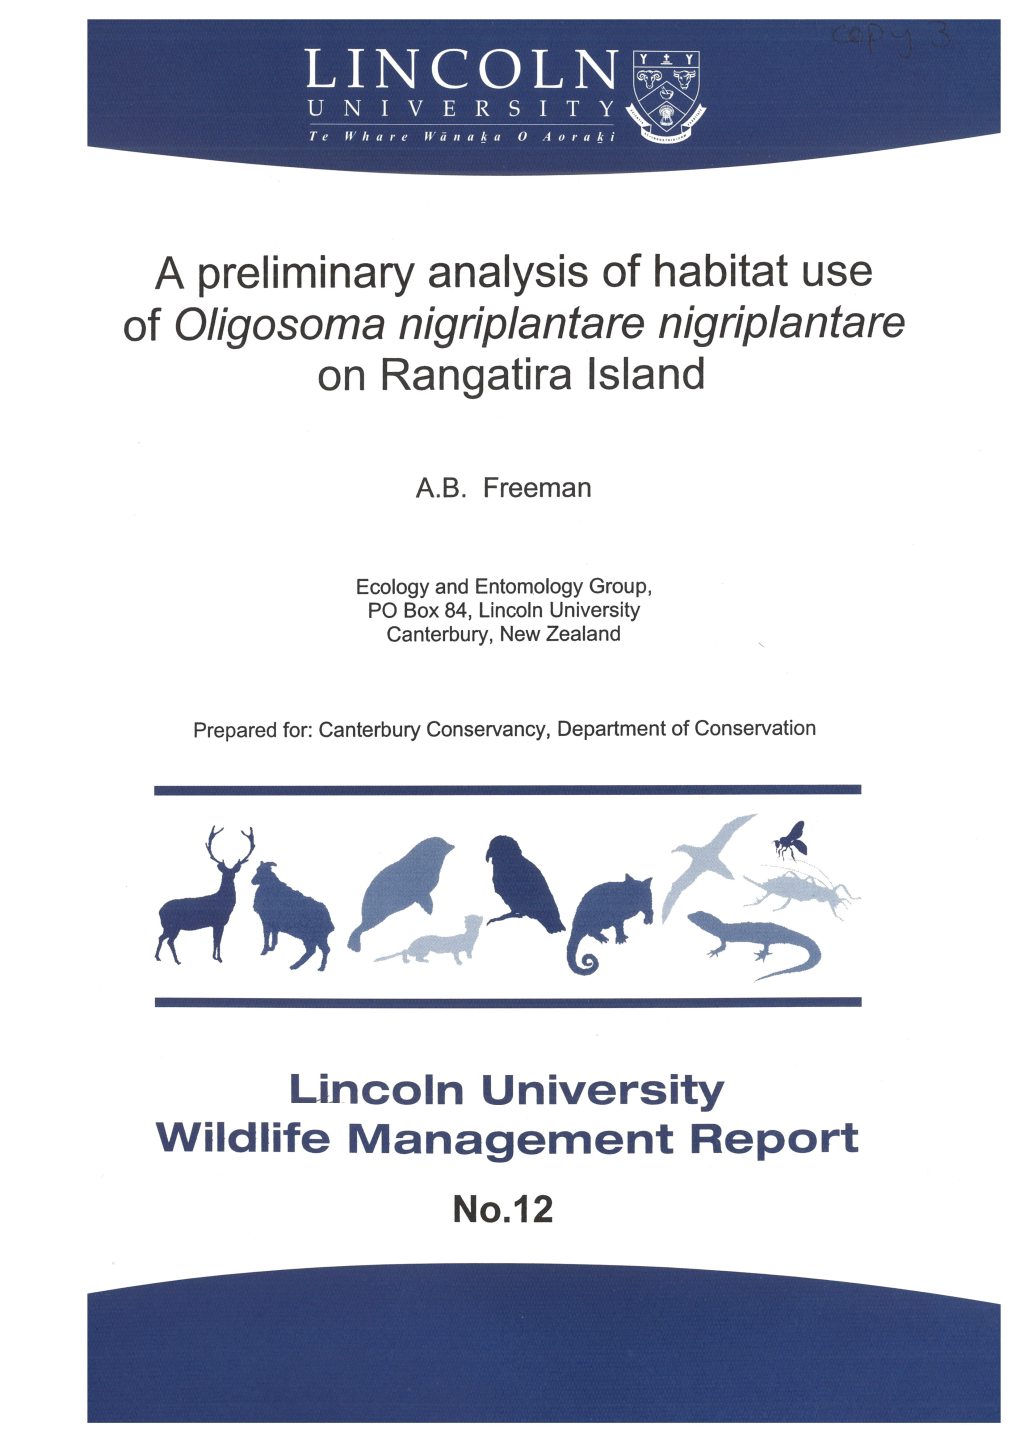 A Preliminary Analysis of Habitat Use of Oligosoma Nigriplantare Nigriplantare on Rangatira Island